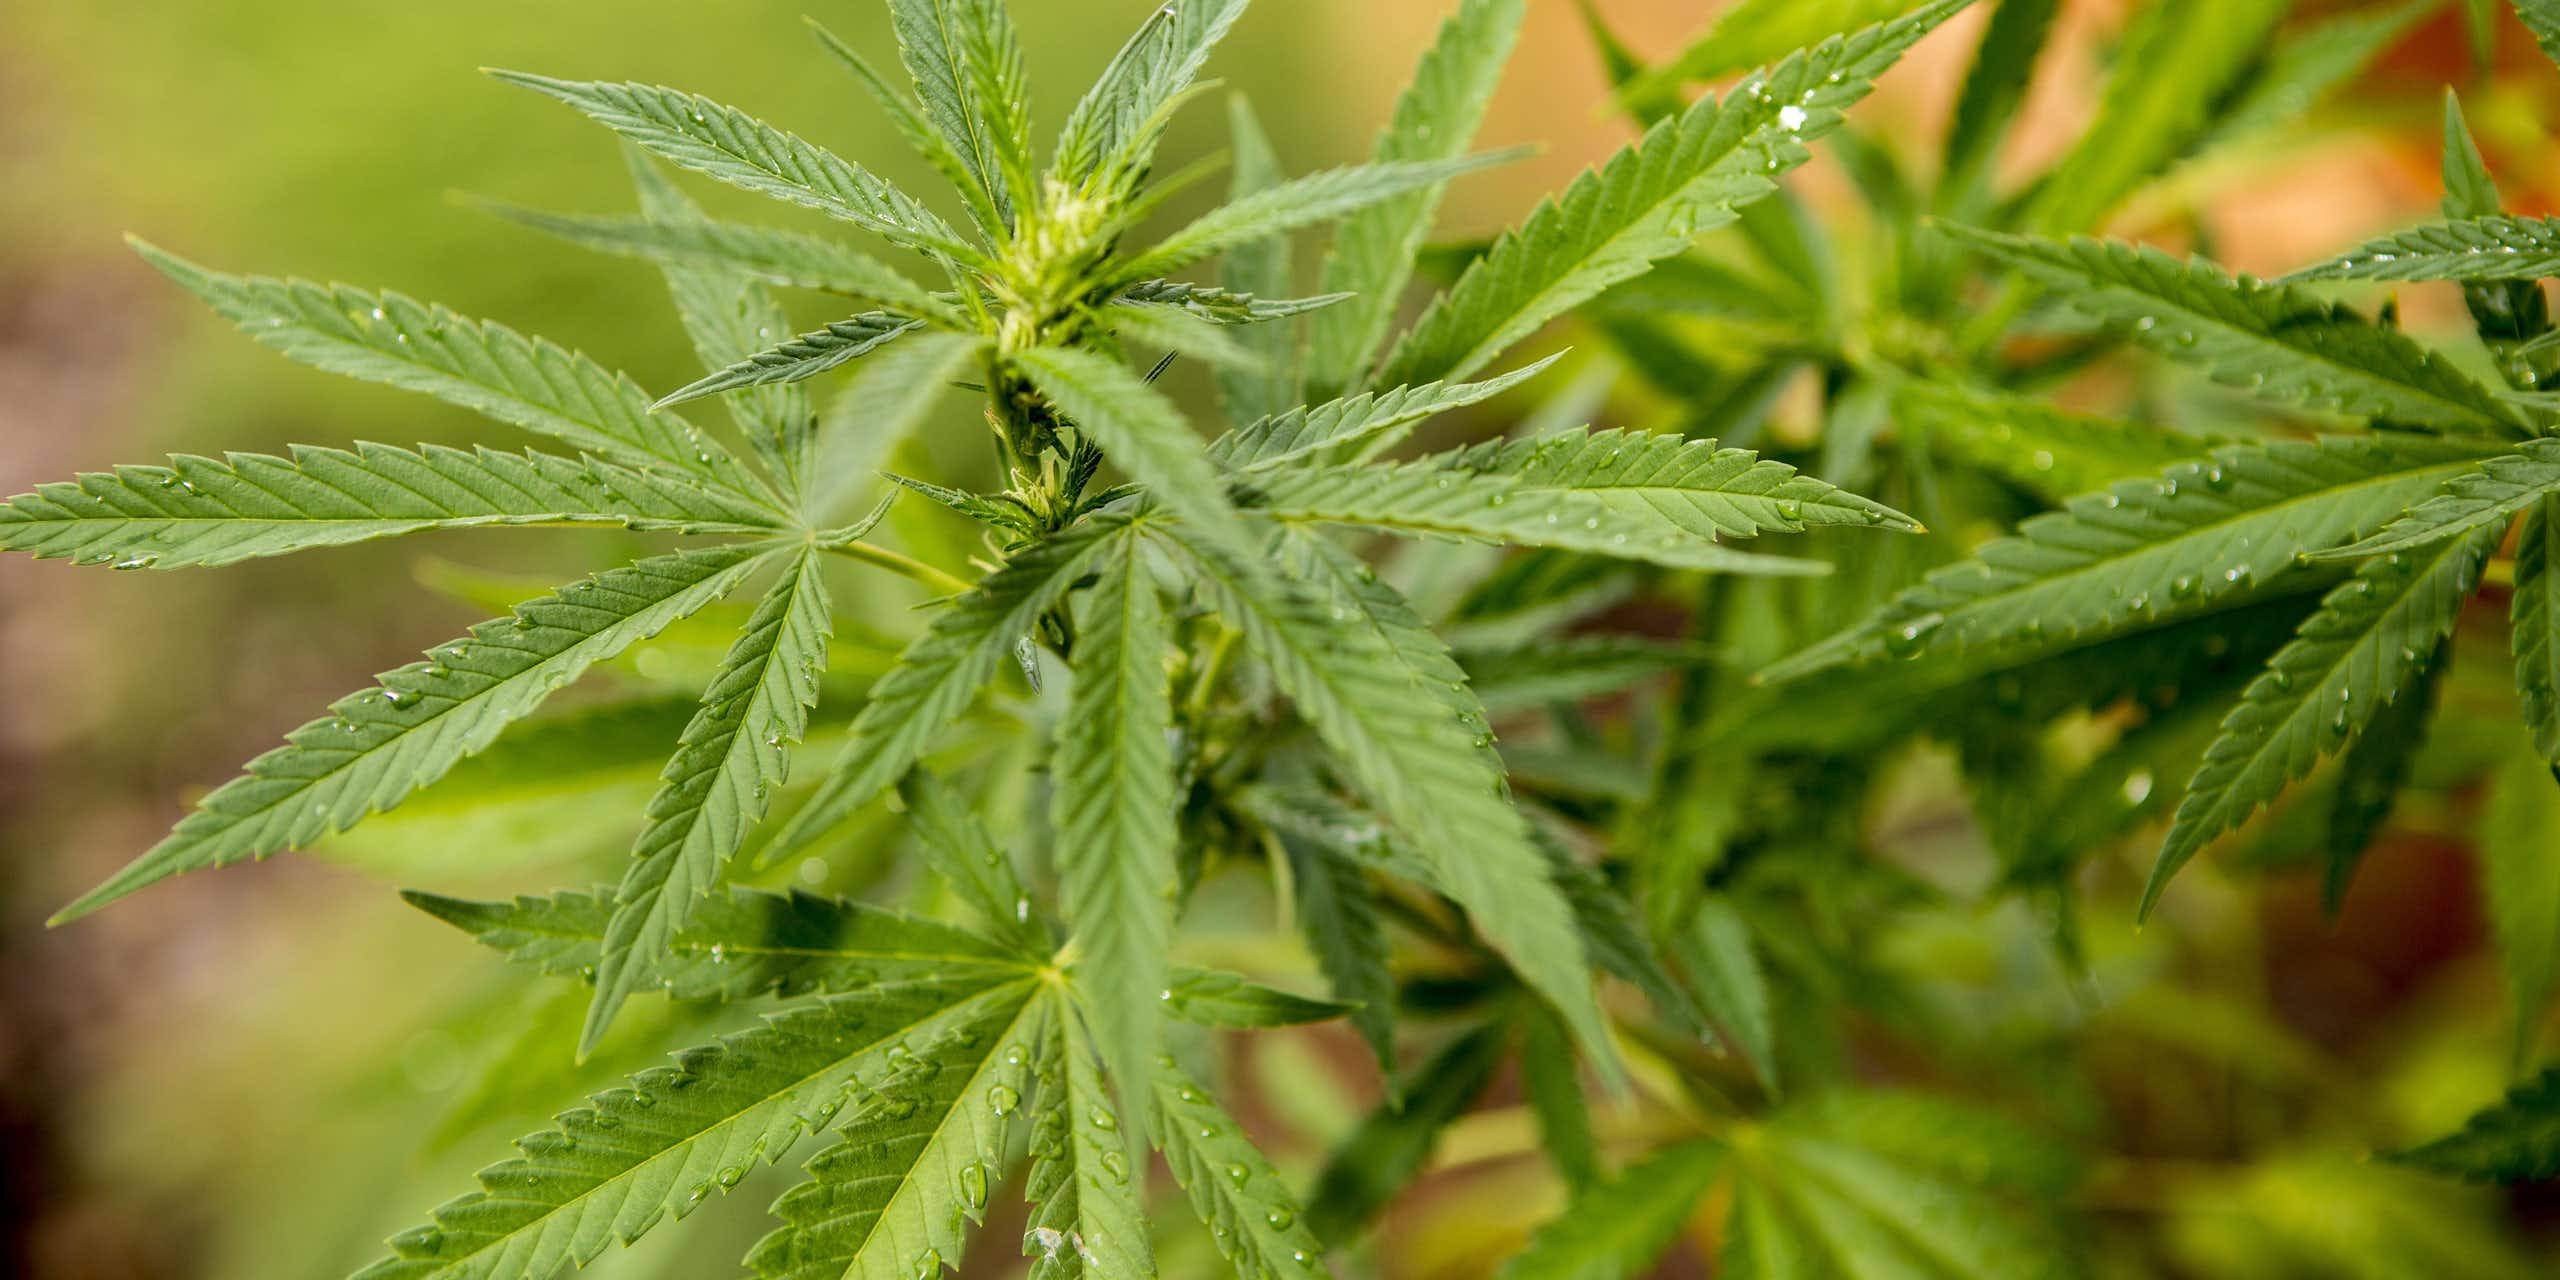 A bright green cannabis plant grows in a garden.